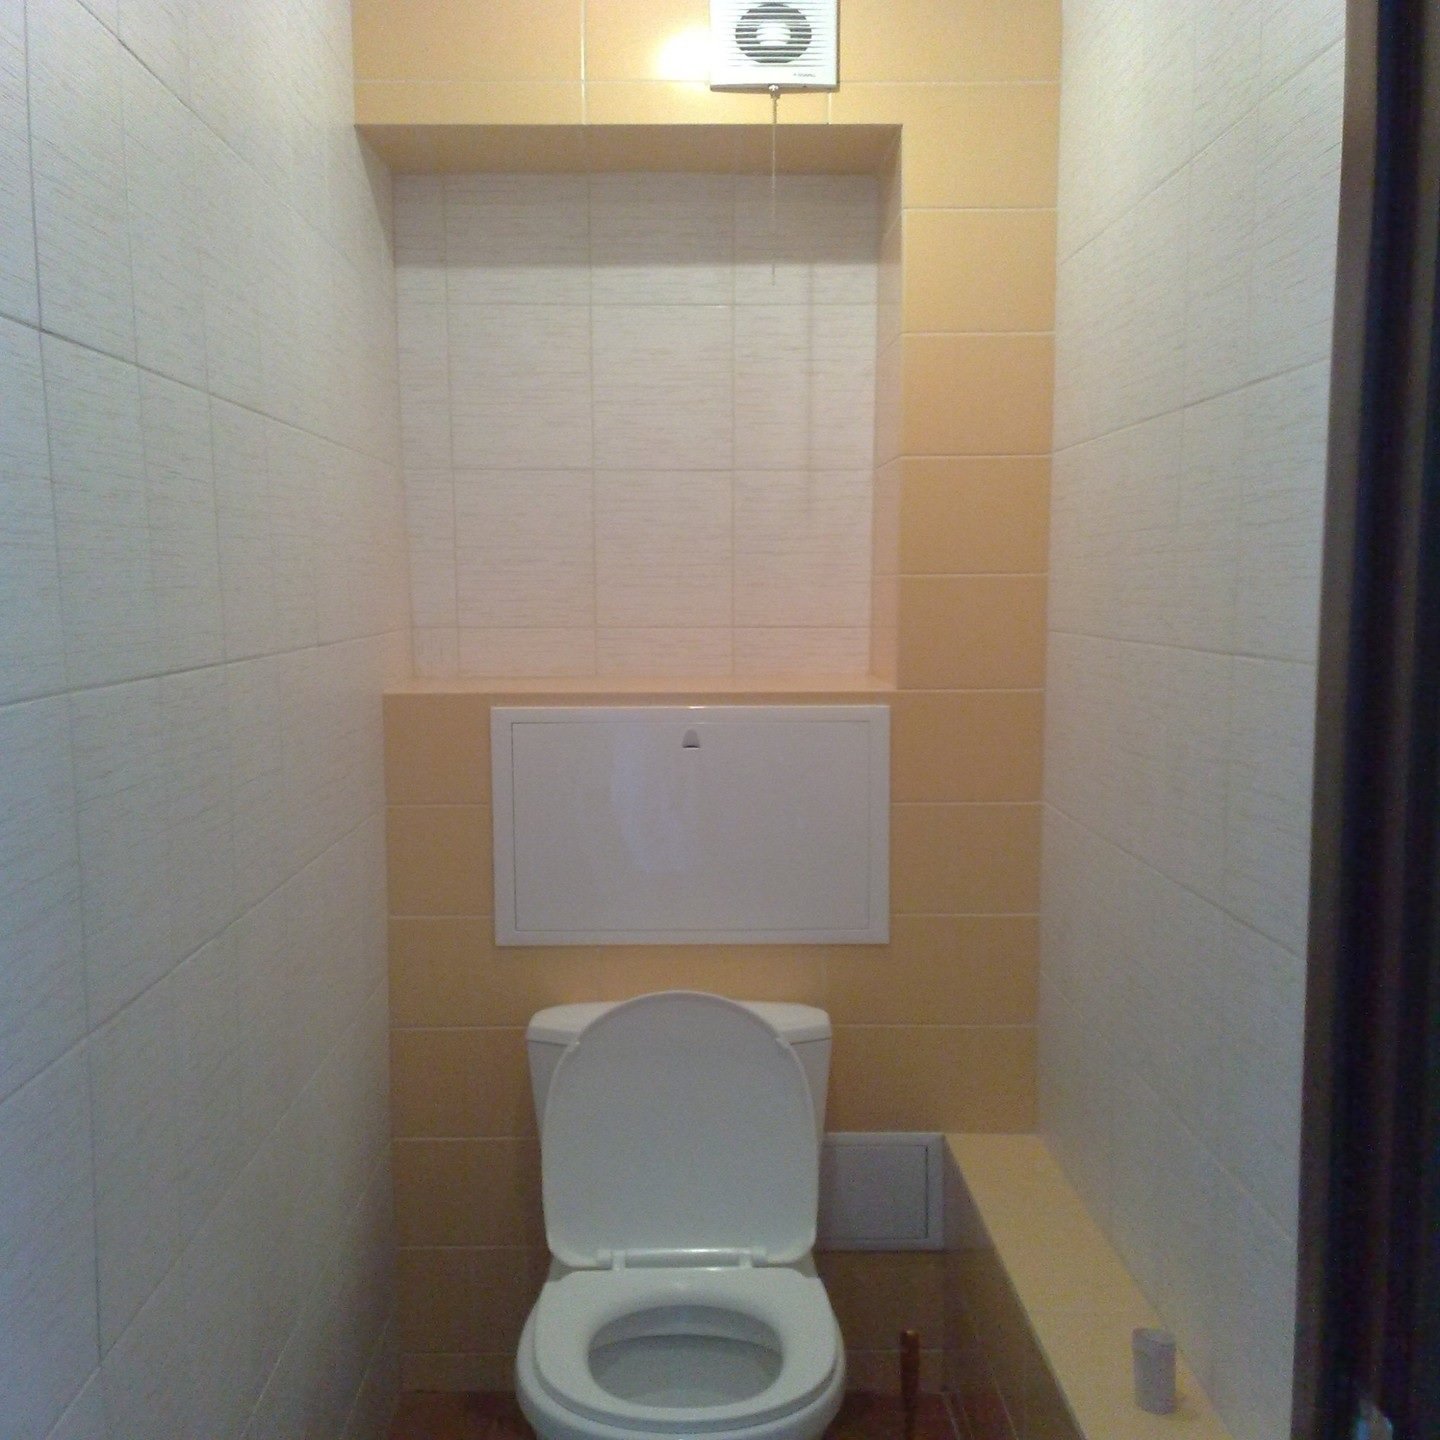 kak zakryt truby v tualete 40 - Как закрыть трубы в туалете: варианты дизайна